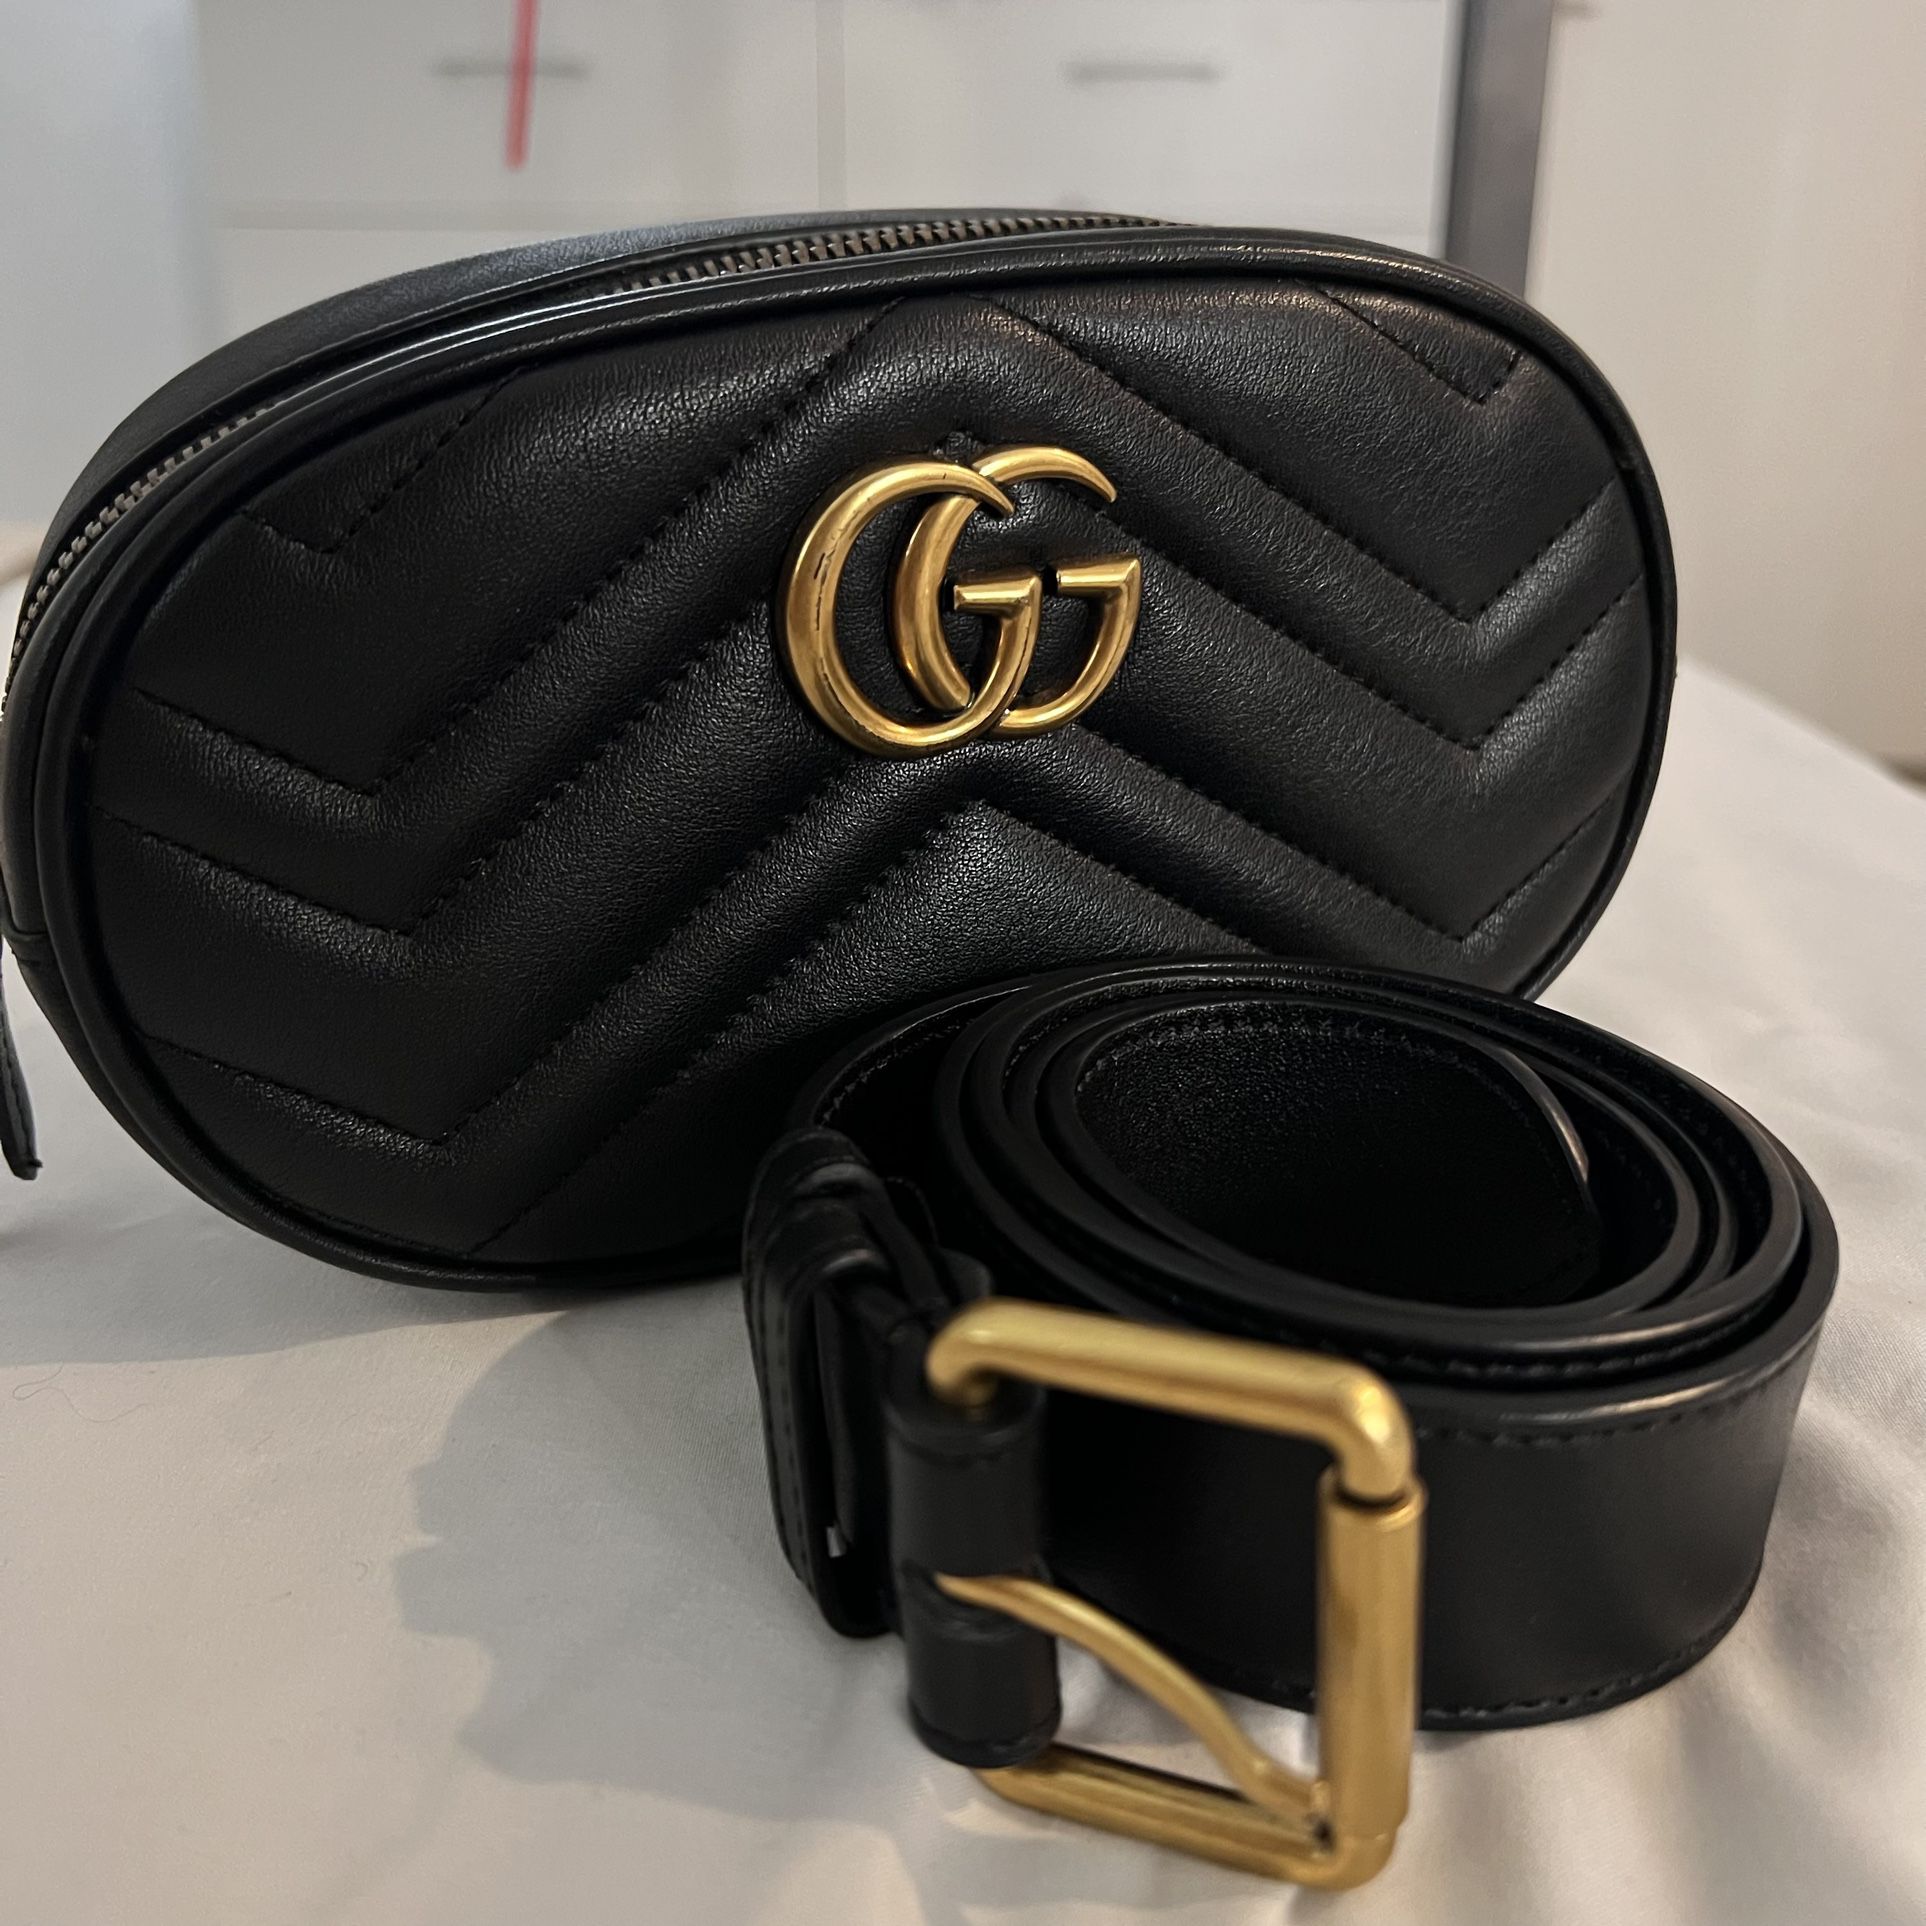 Gucci's Belt Bag: How to Wear It